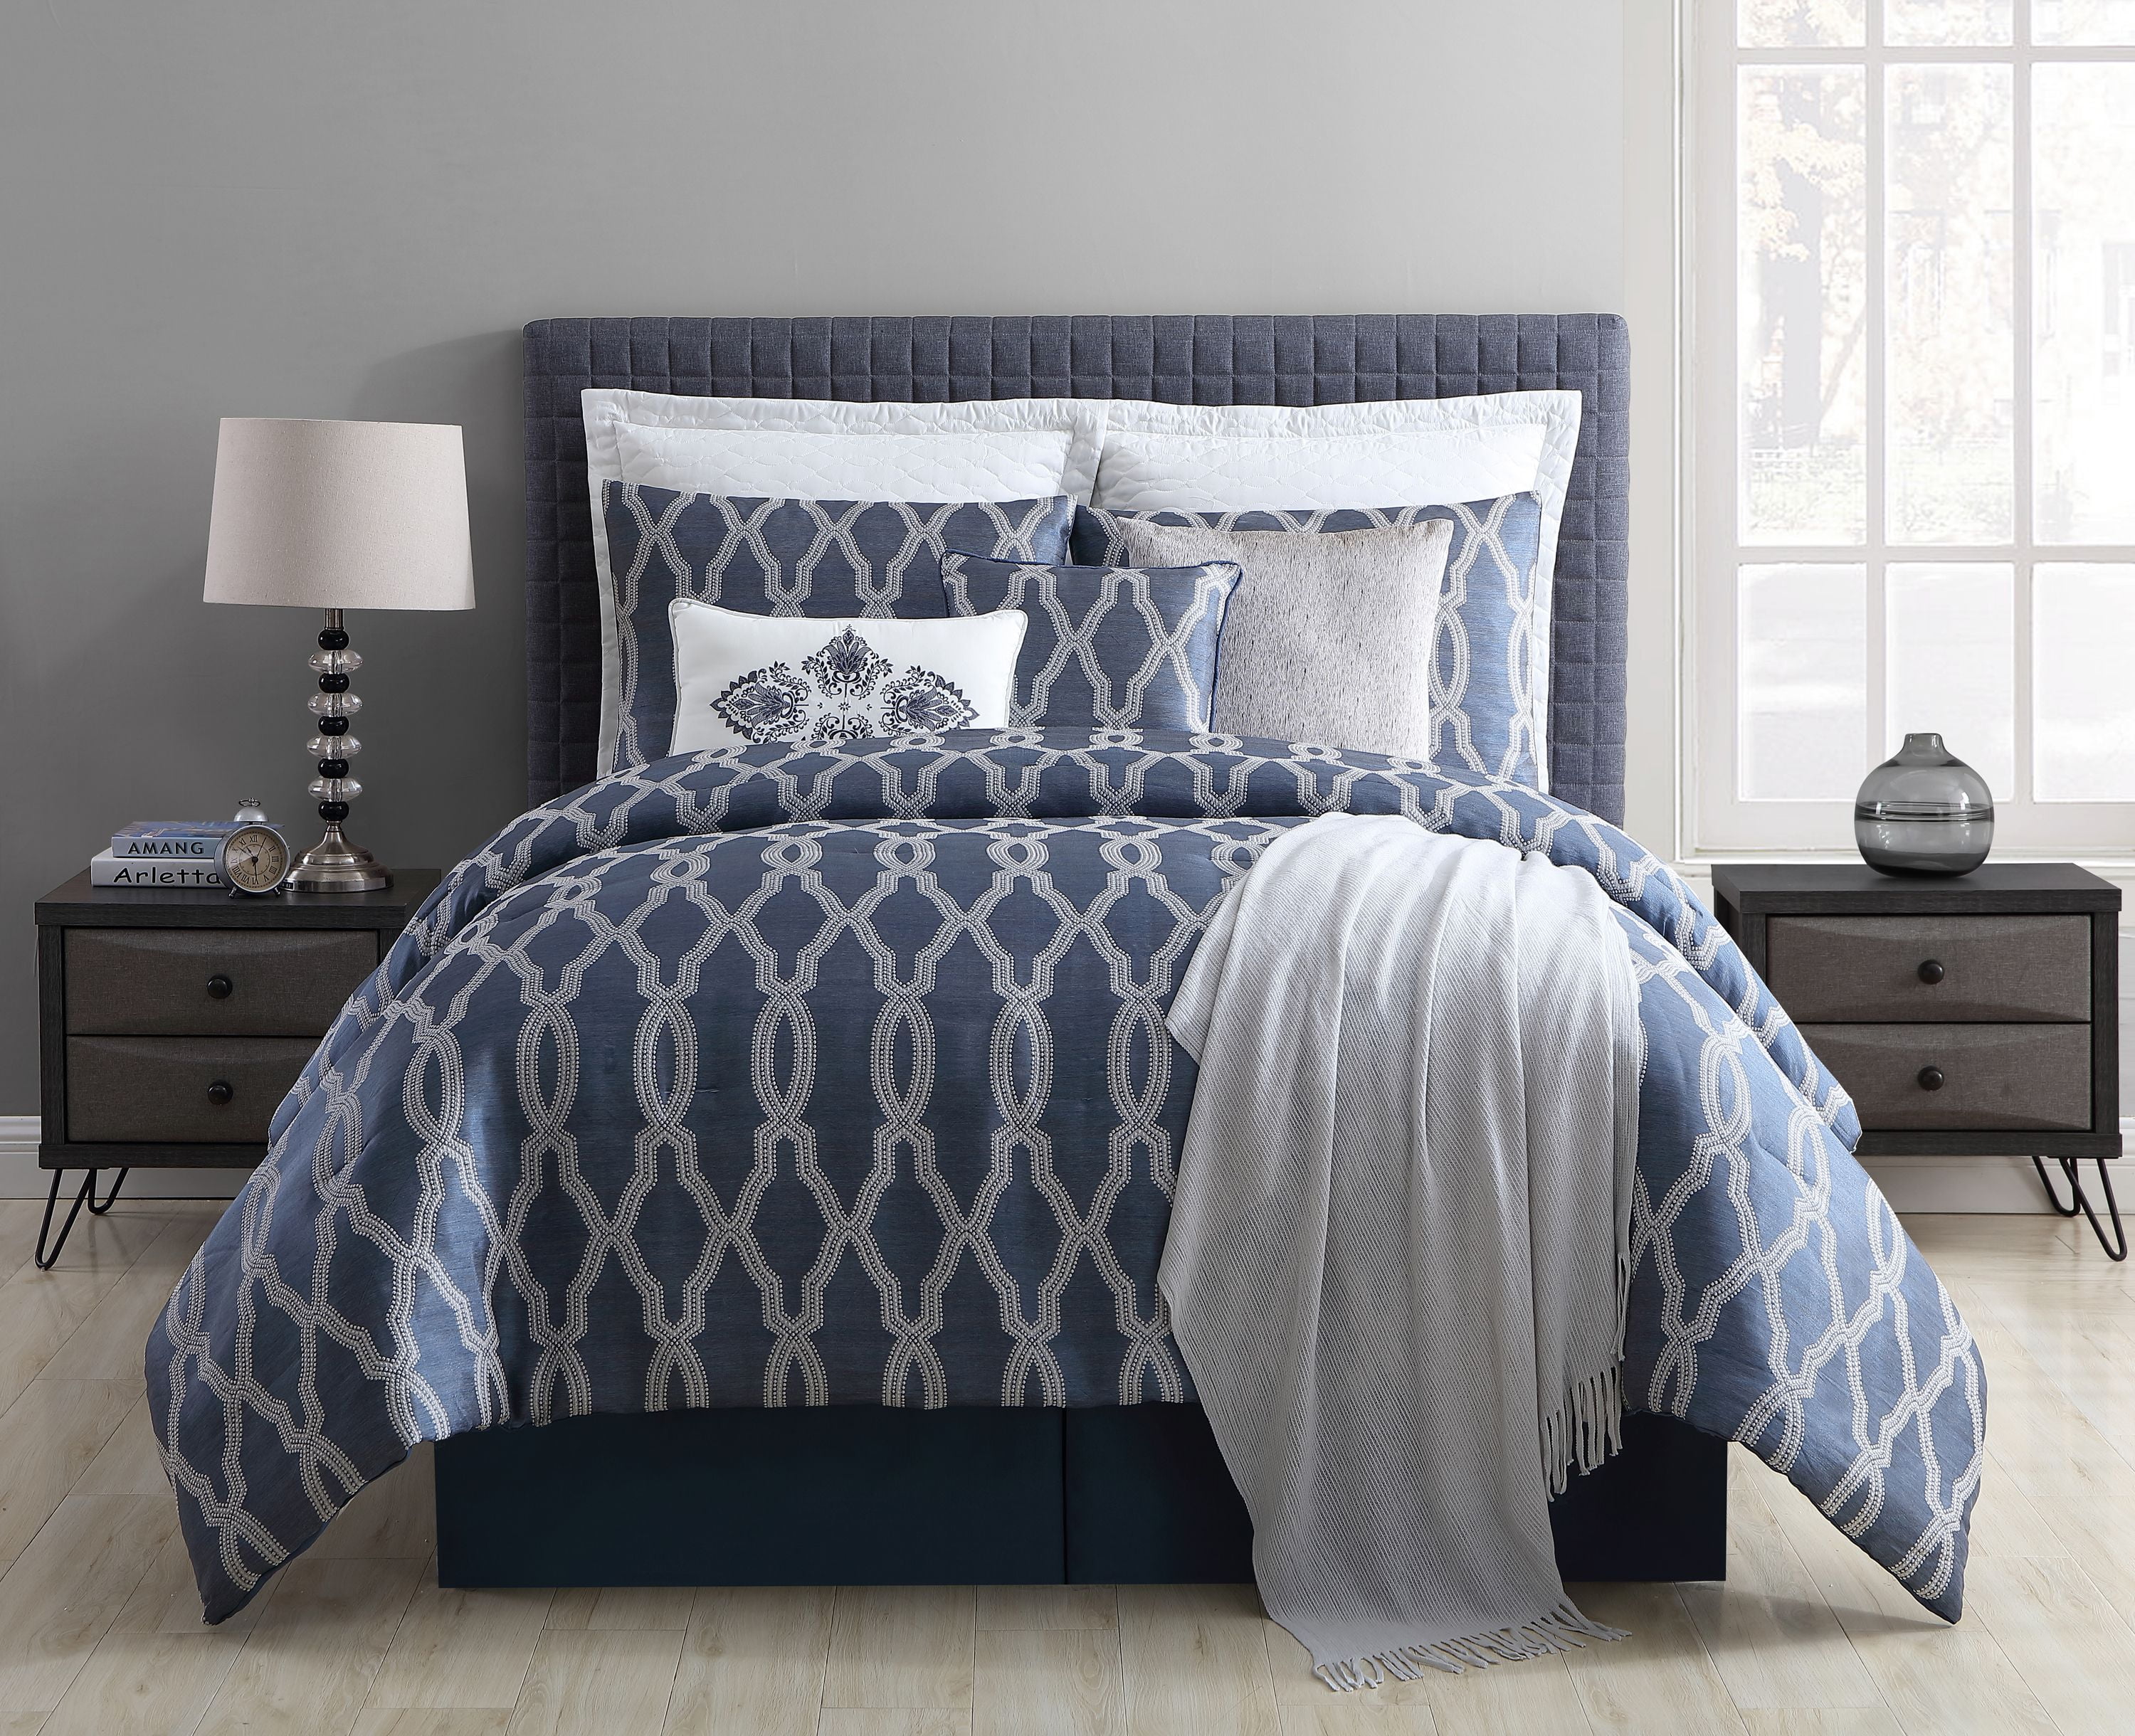 VCNY Home Brady Jacquard Trellis Comforter Set, King, Blue - Walmart.com